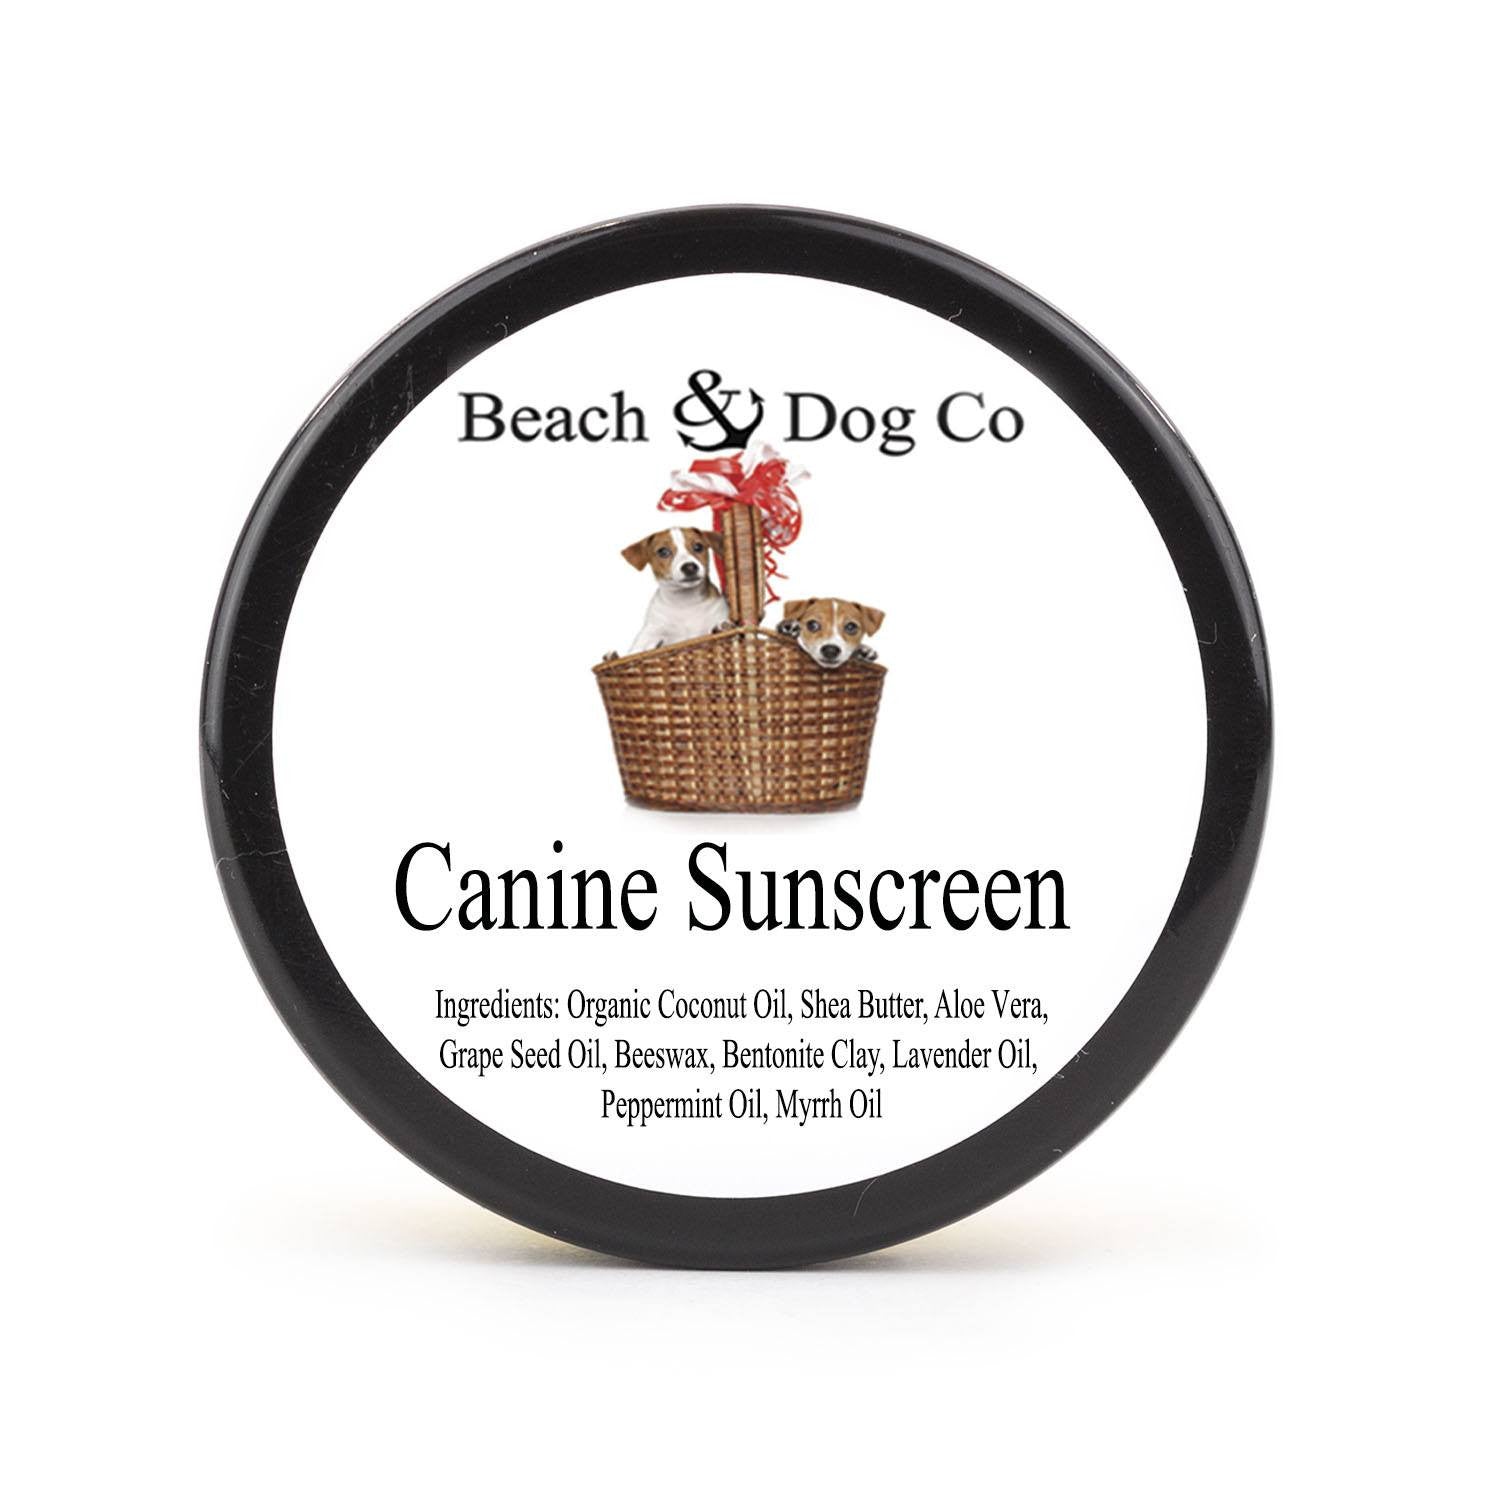 Canine Sunscreen (2 oz) Zinc and Titanium Dioxide Free - Beach & Dog Co.